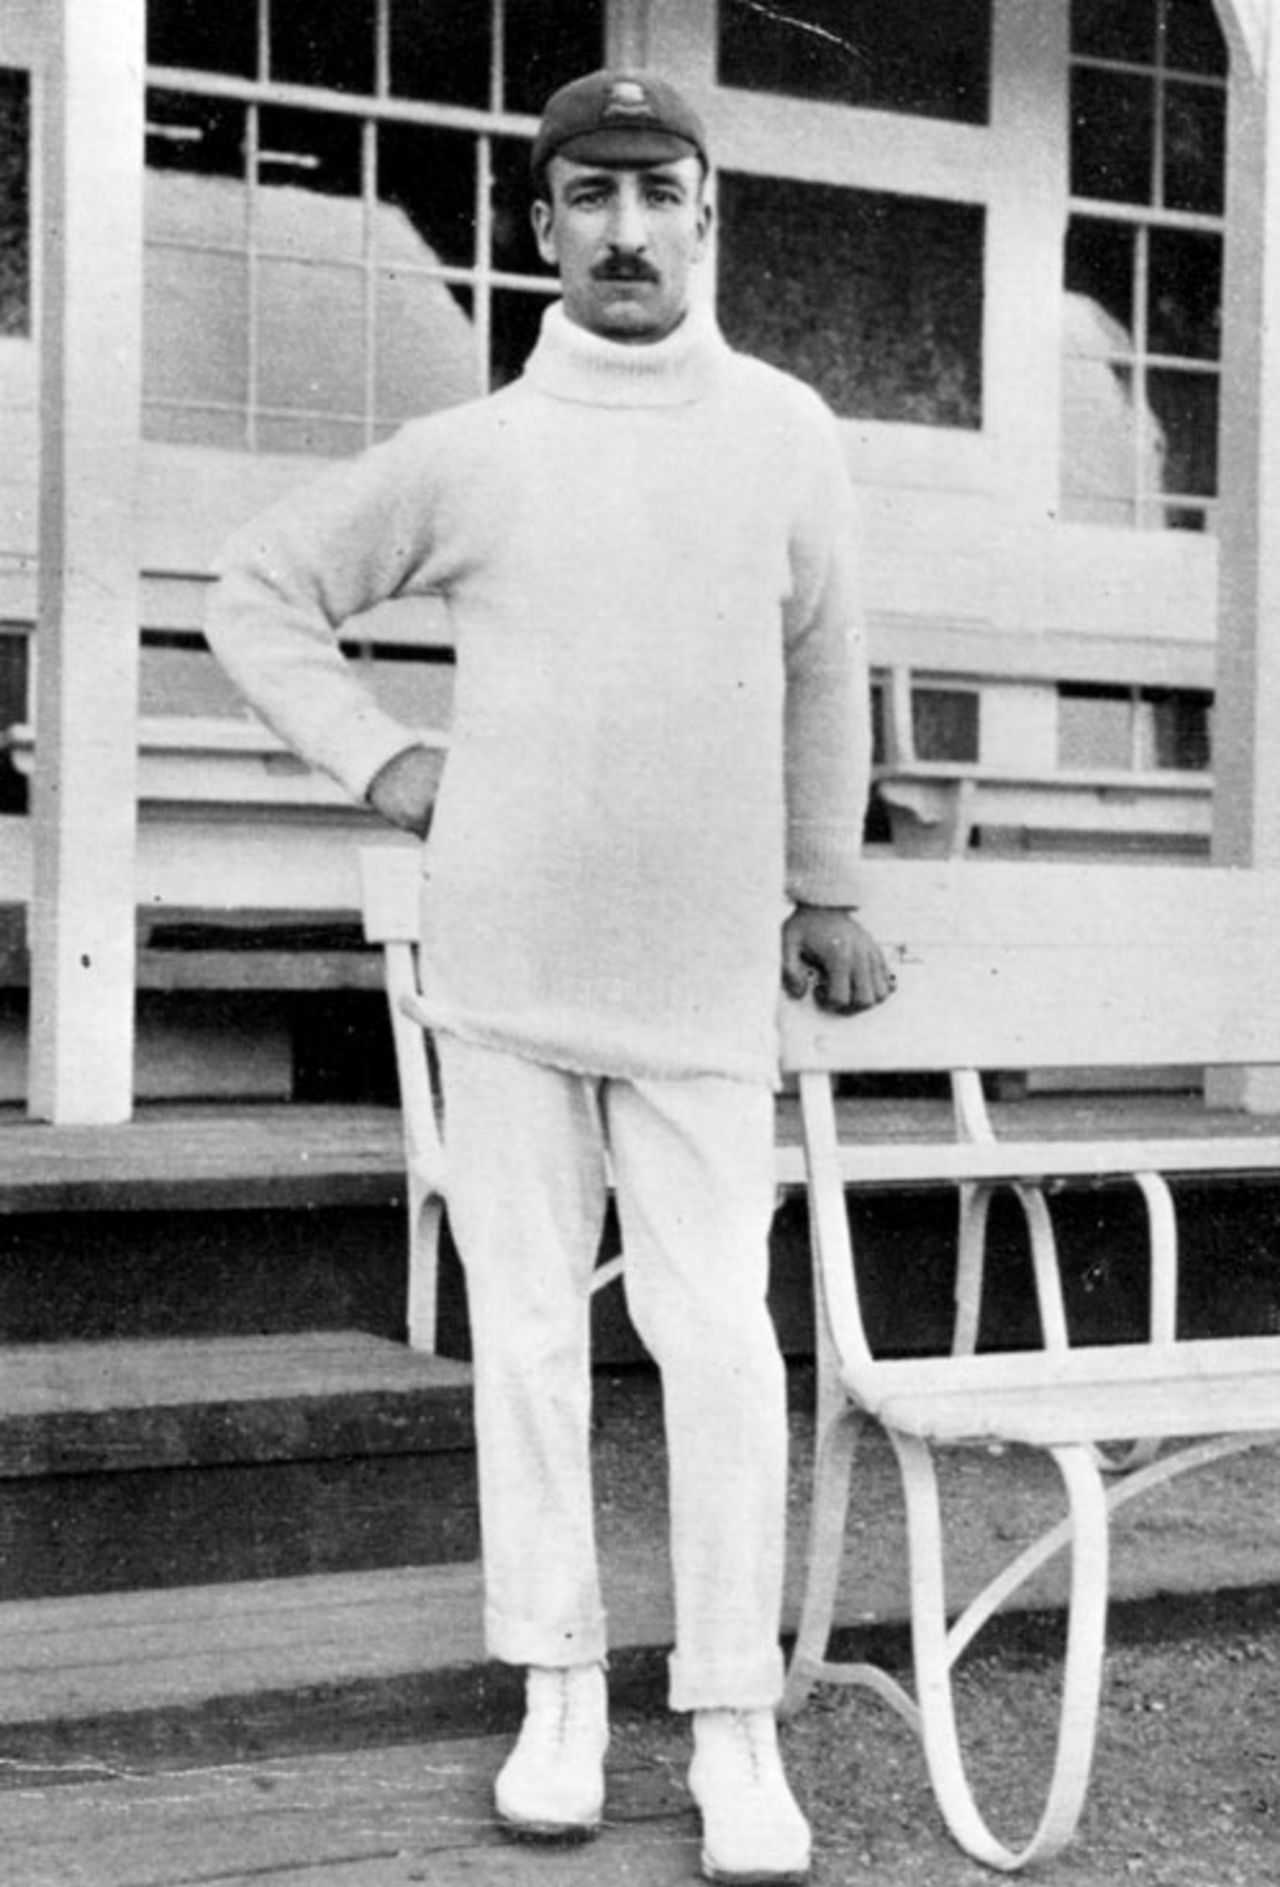 Essex batsman John Freeman, circa 1910